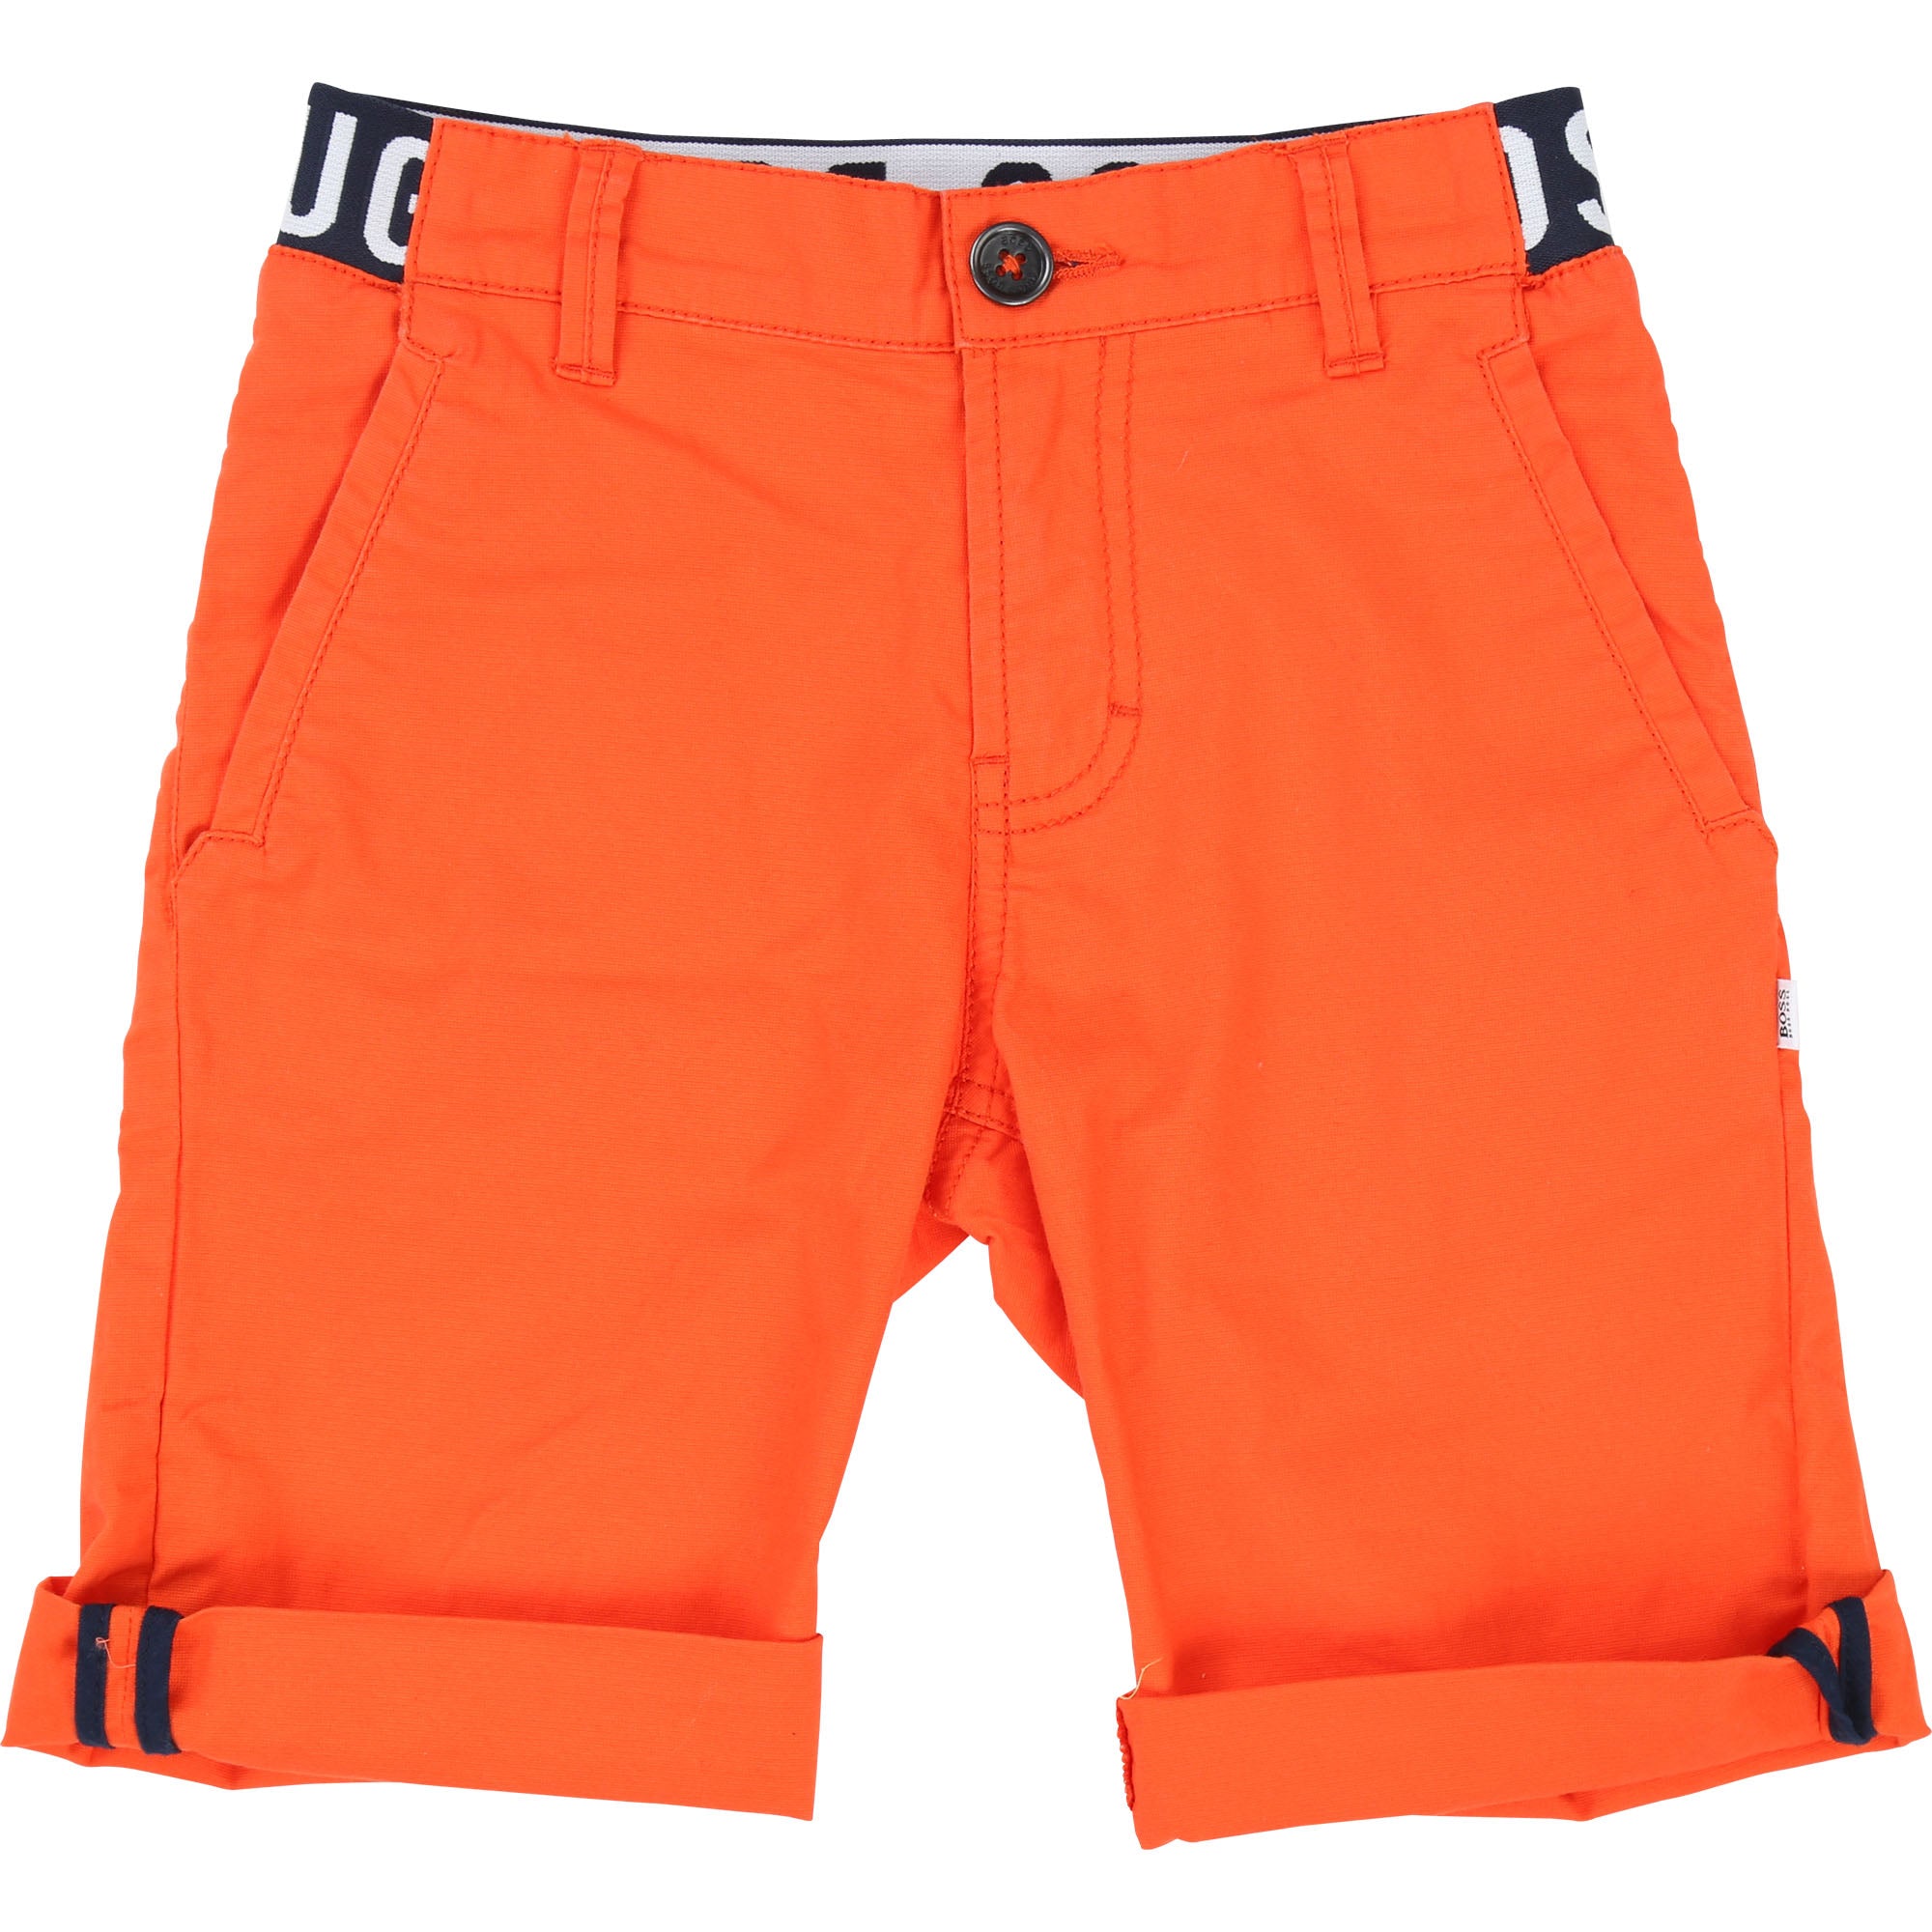 Boys Orange Red Cotton Shorts